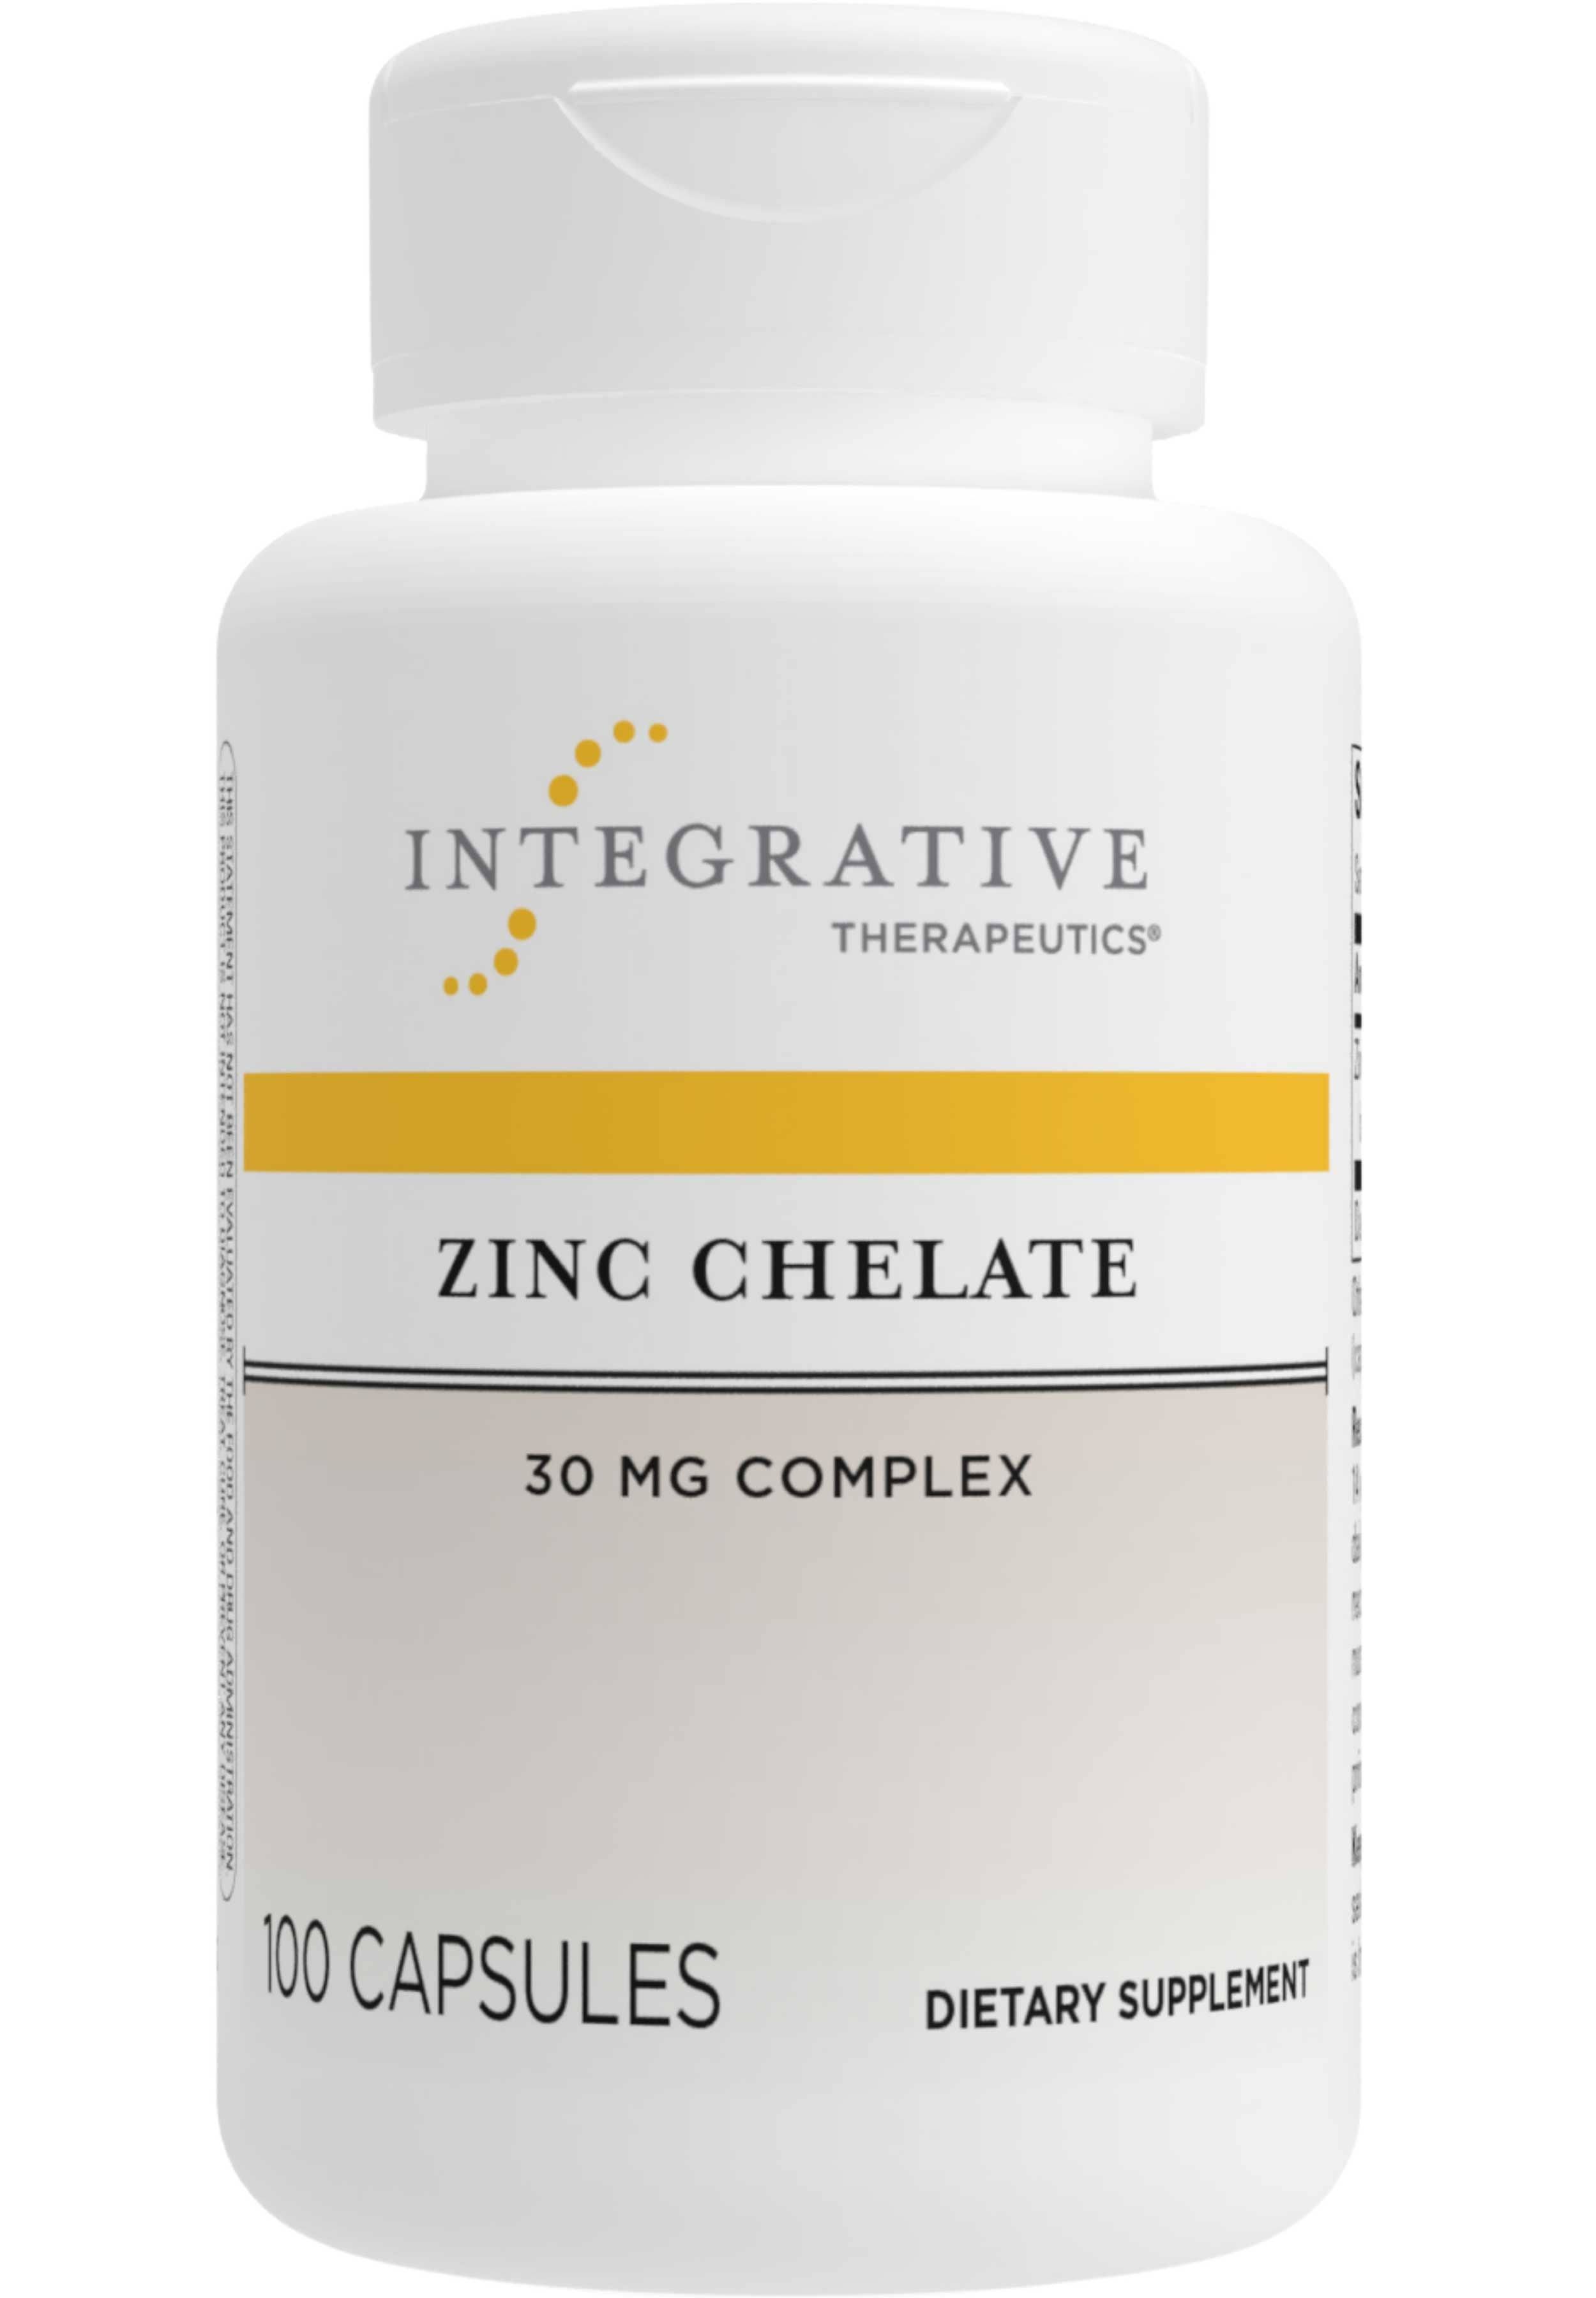 Integrative Therapeutics Zinc Chelate 30 mg Complex - 100 Capsules